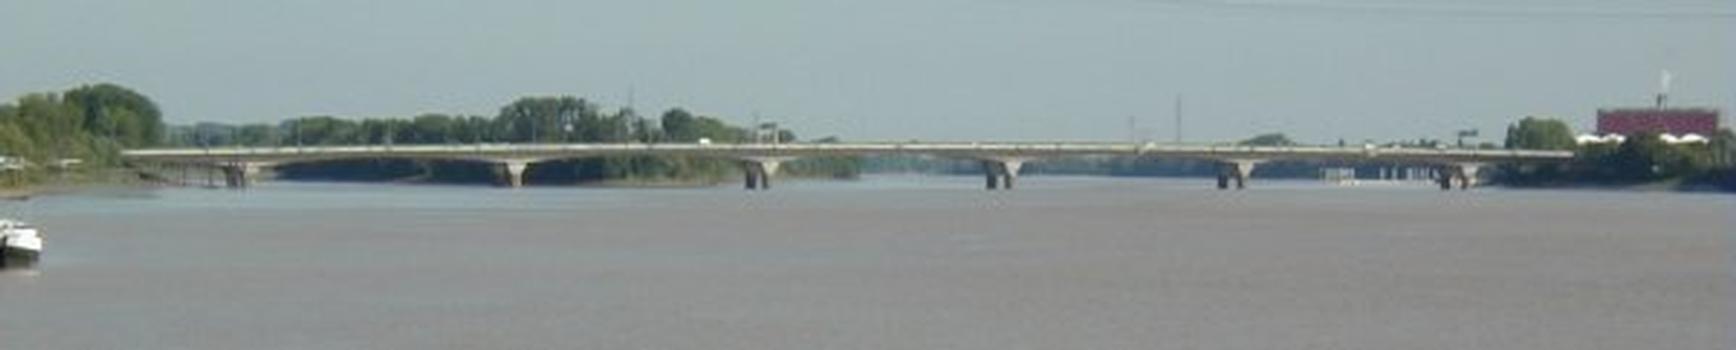 François-Mitterand-Brücke in Bordeaux